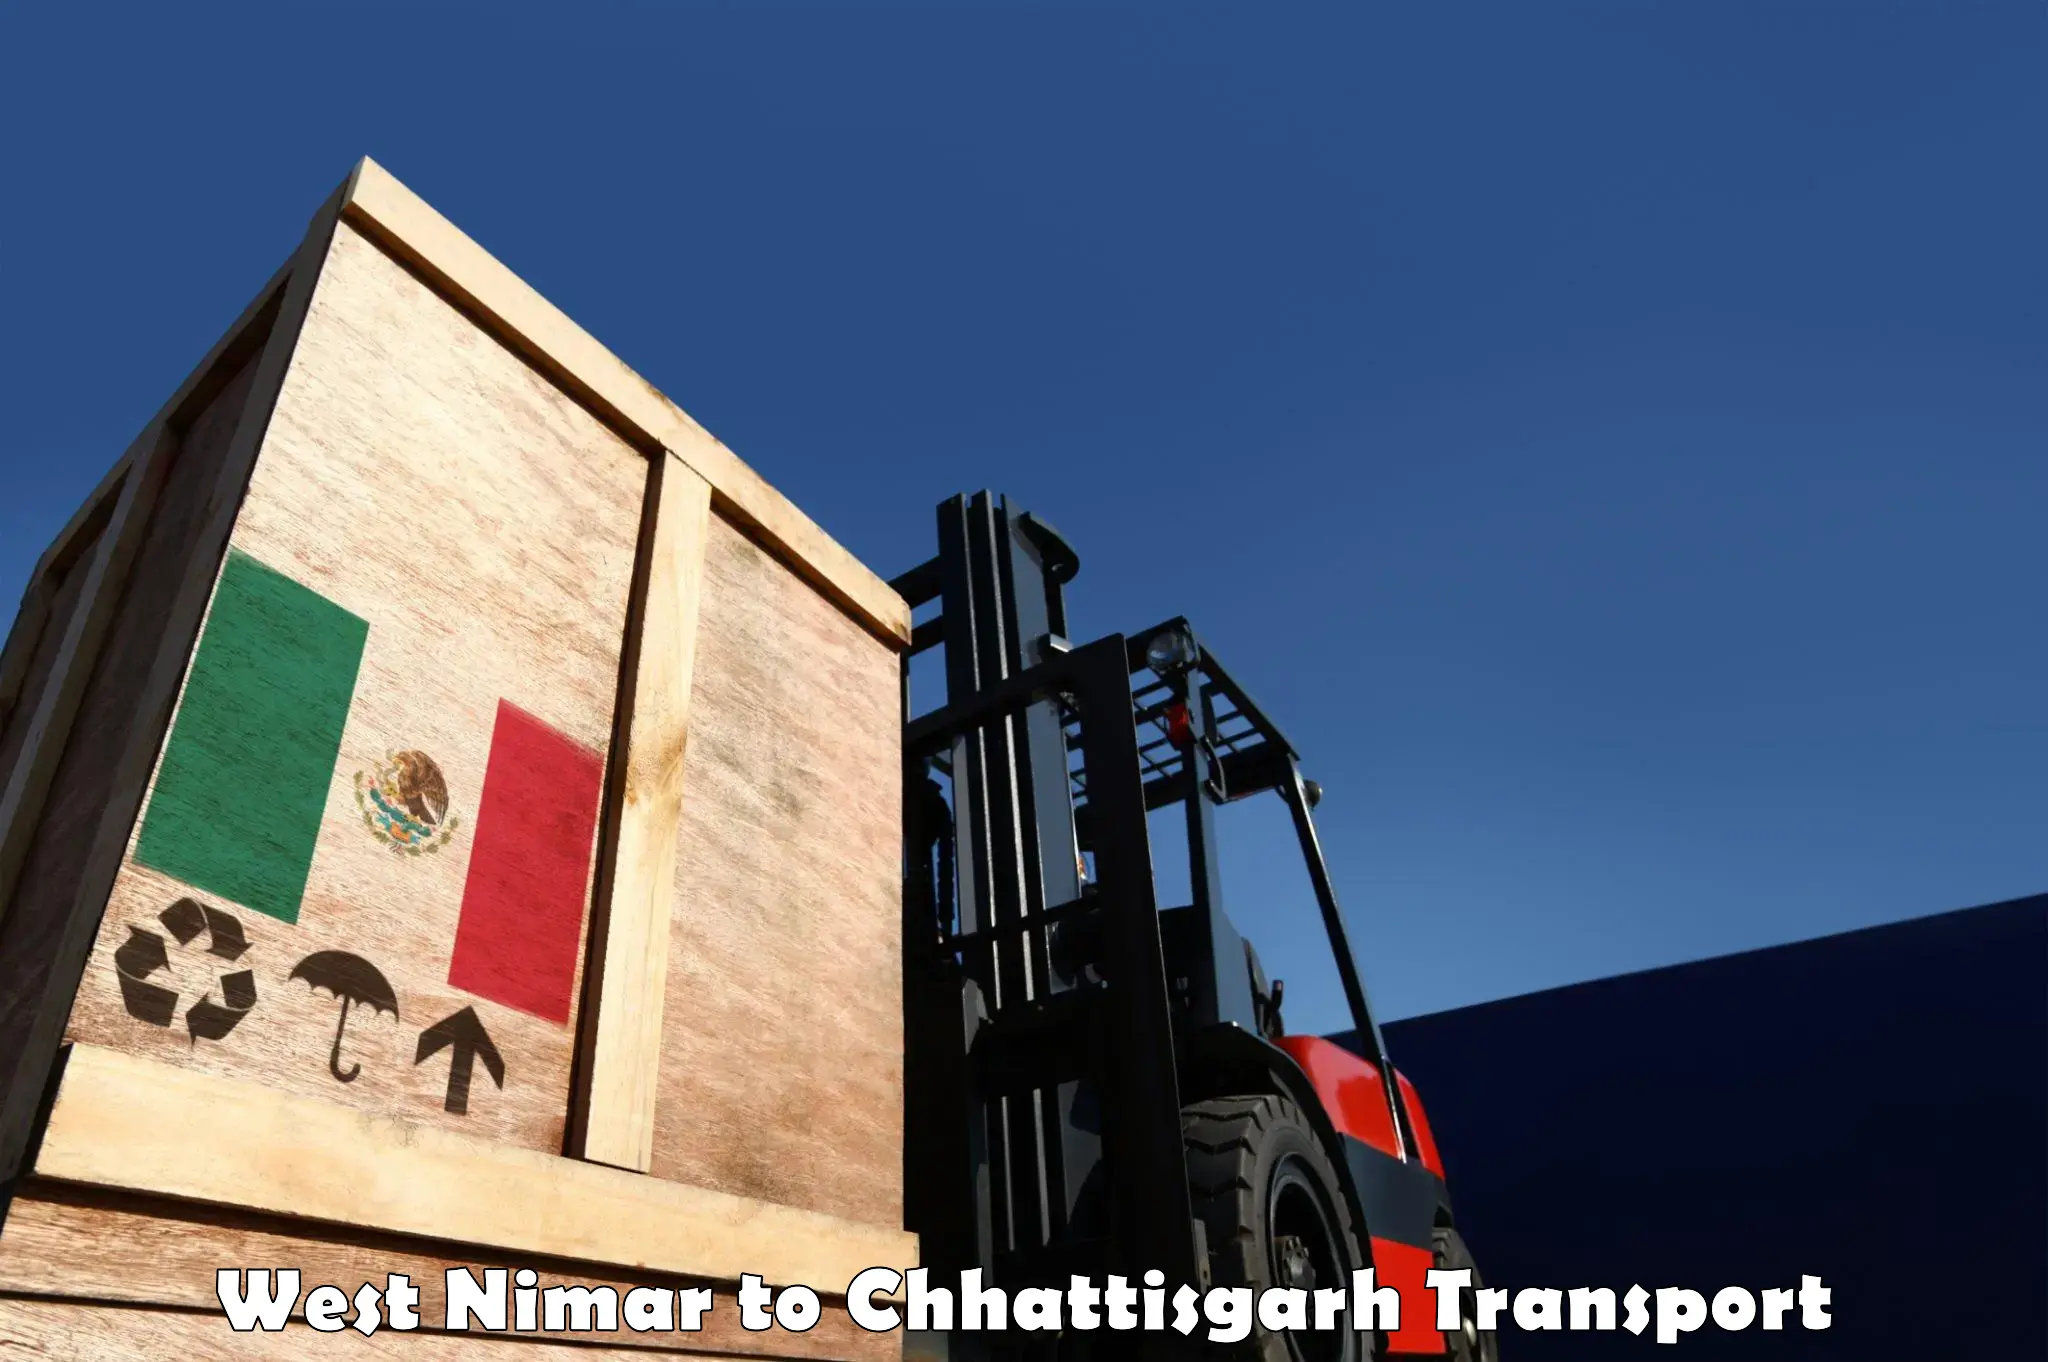 Nearby transport service West Nimar to Raigarh